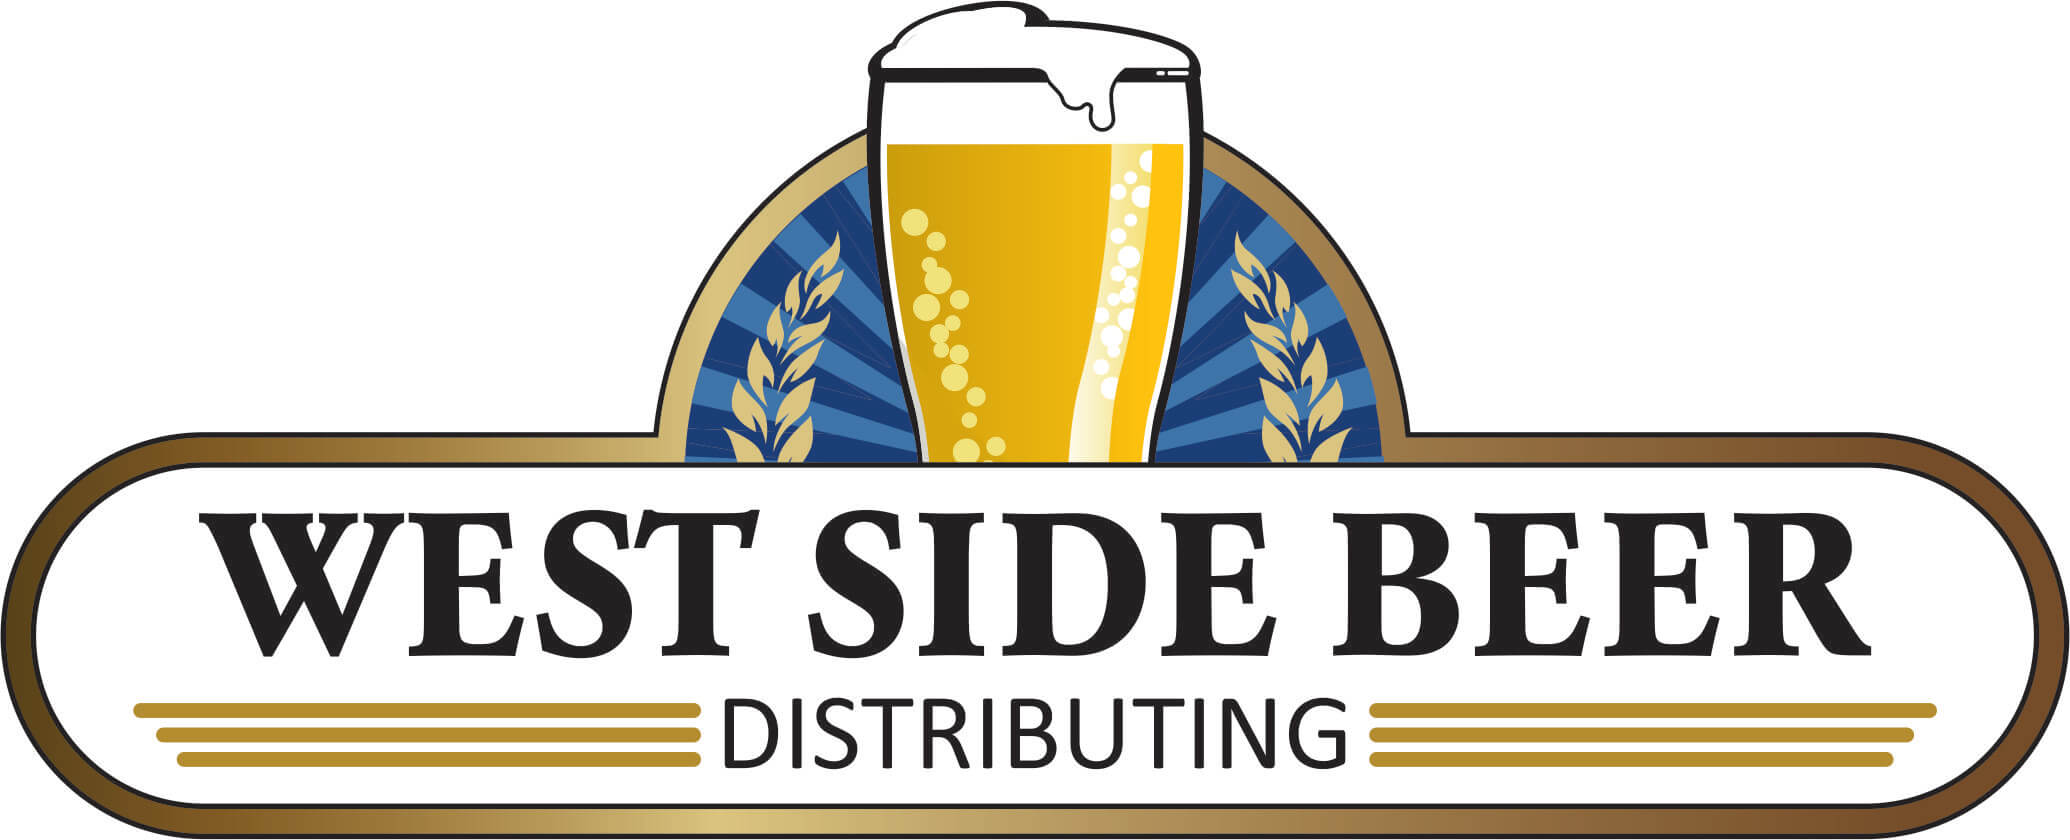 West Side Beer Distributing Logo